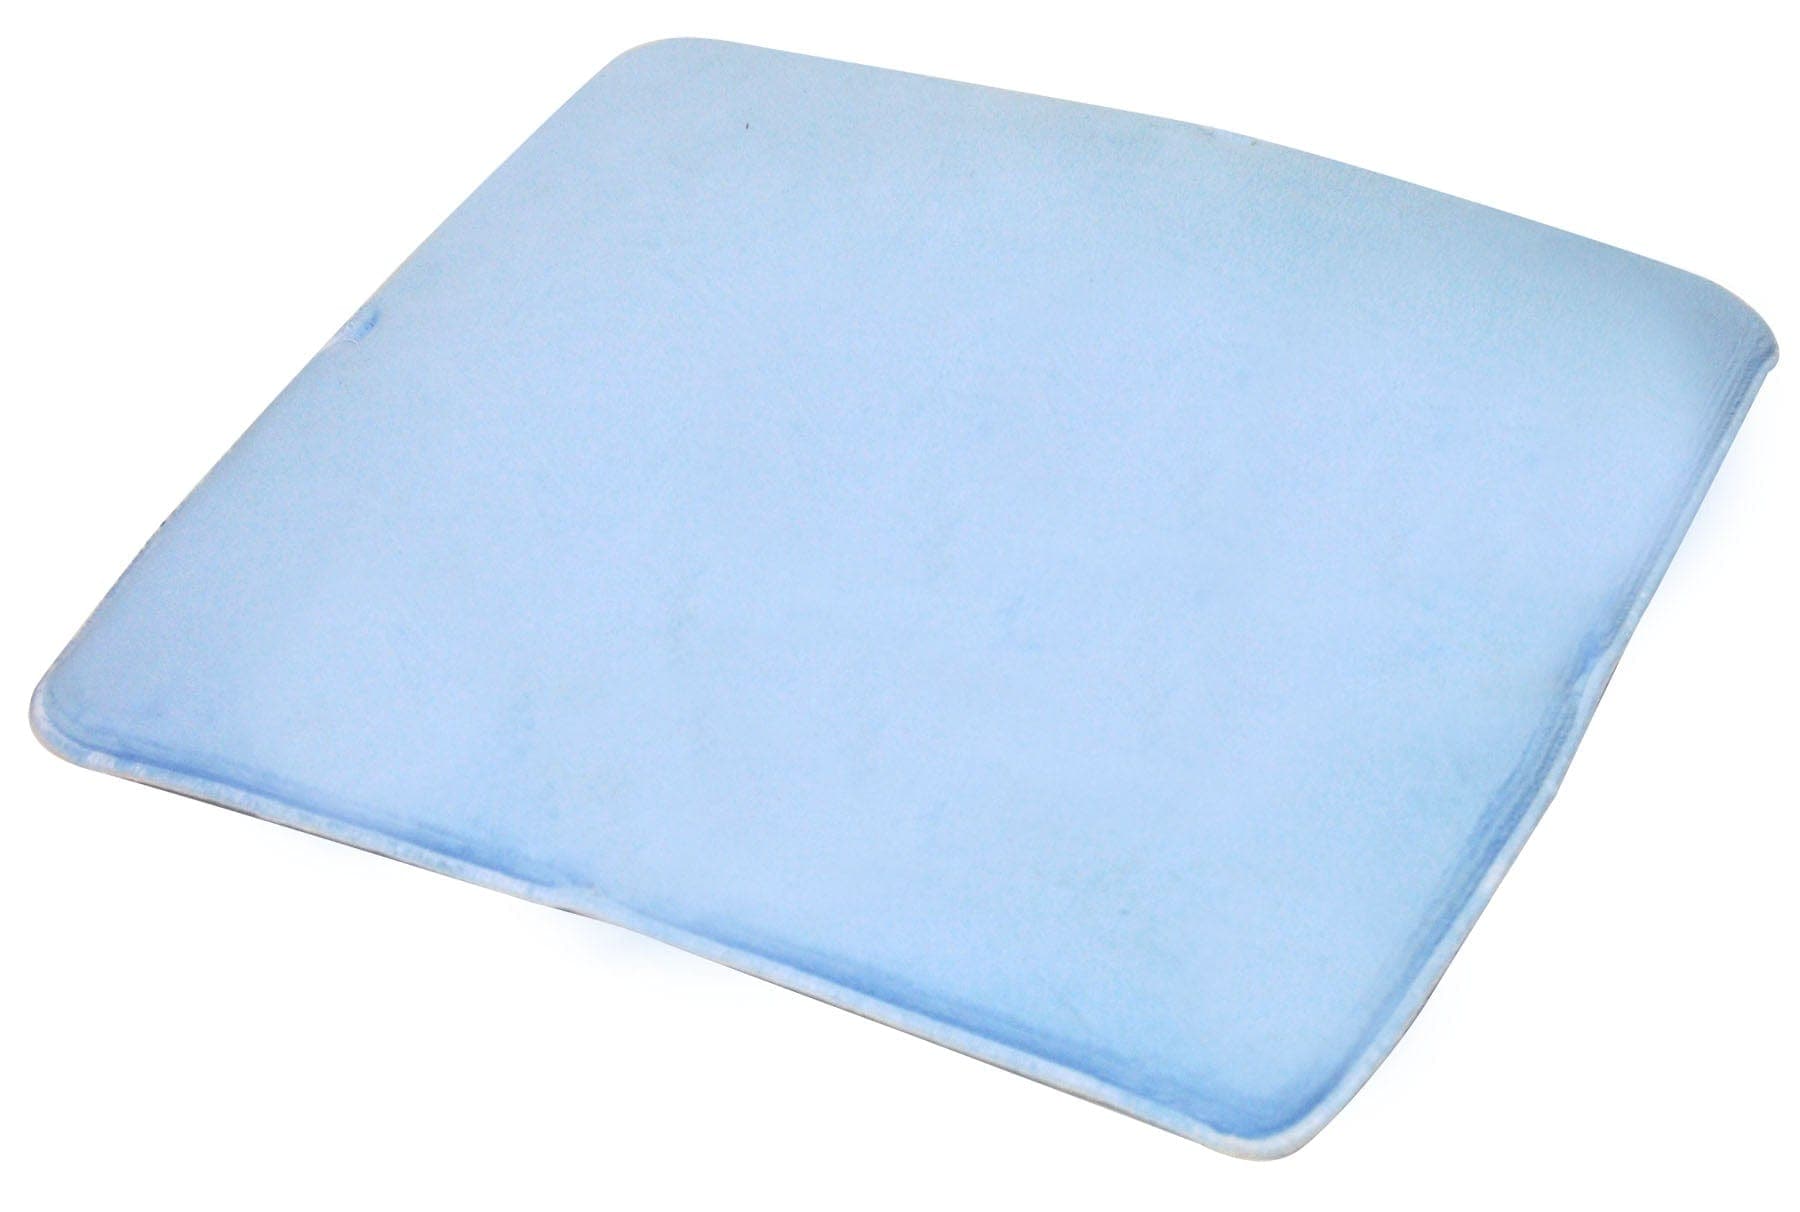 SkilCare Cushions Pack of 12 SkilCare Cushion Pad Protector, 12/PK